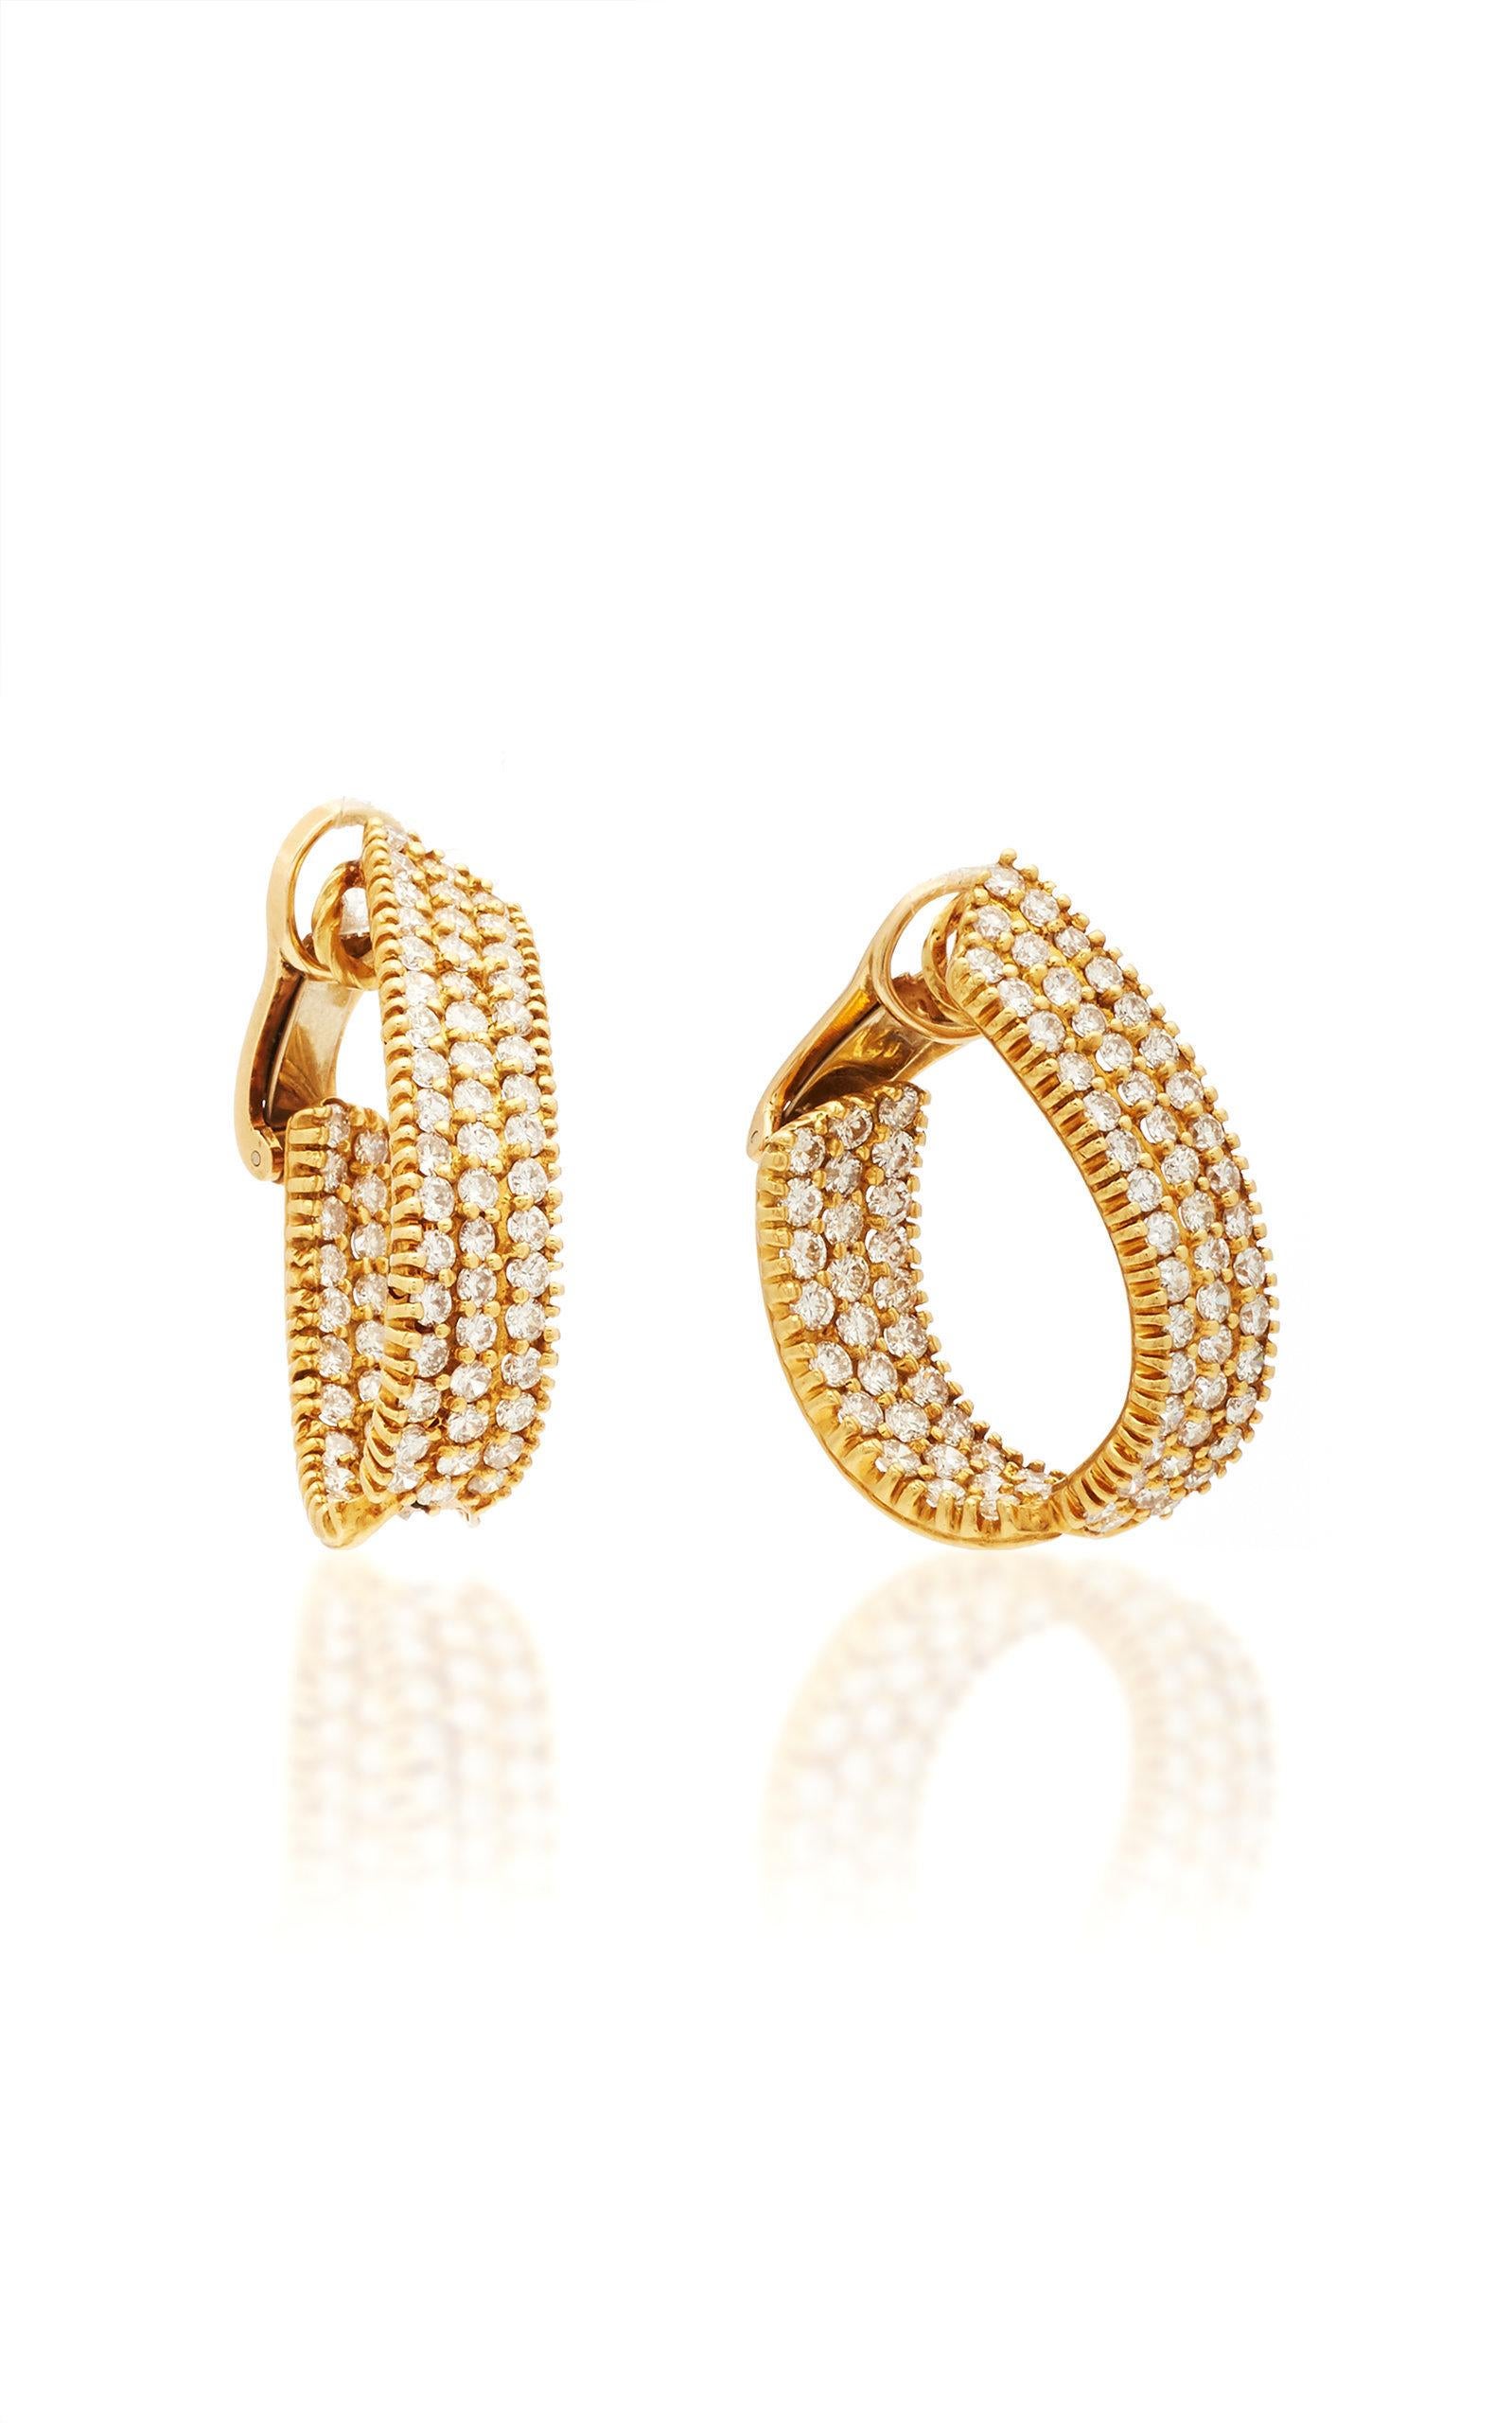 Round Cut Gold Hoop Diamond Earrings For Sale